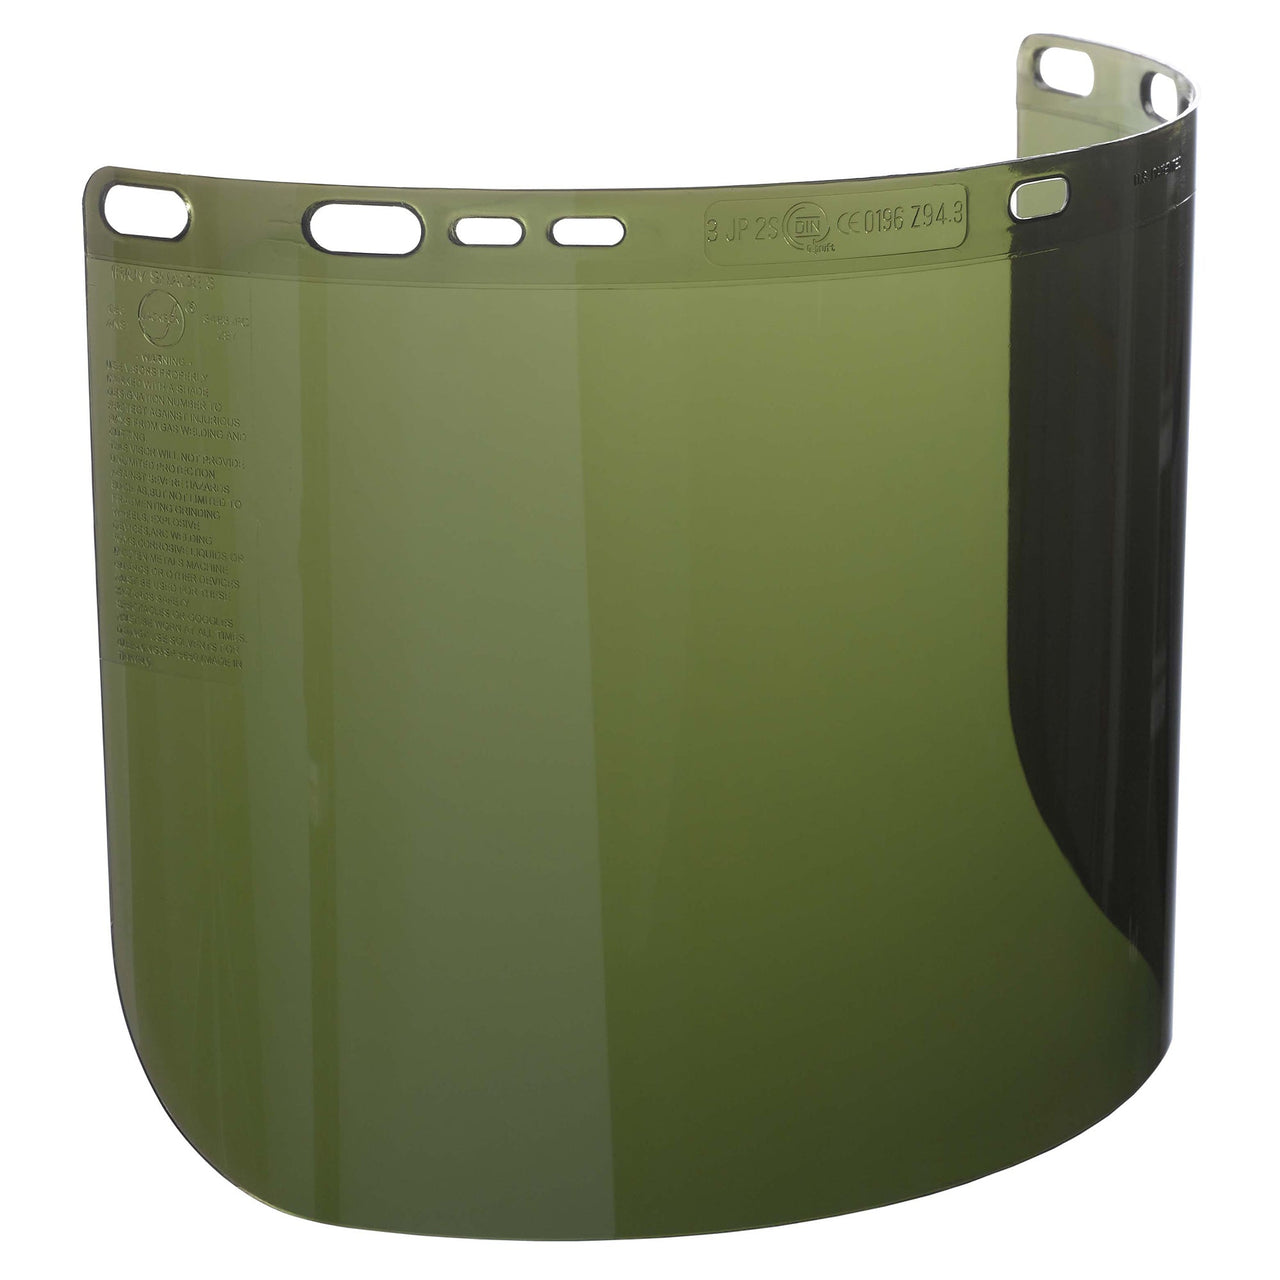 Jackson F50 Polycarbonate Face Shield, IR/UV Shade 3.0, 15 1/2" x 8" 26262